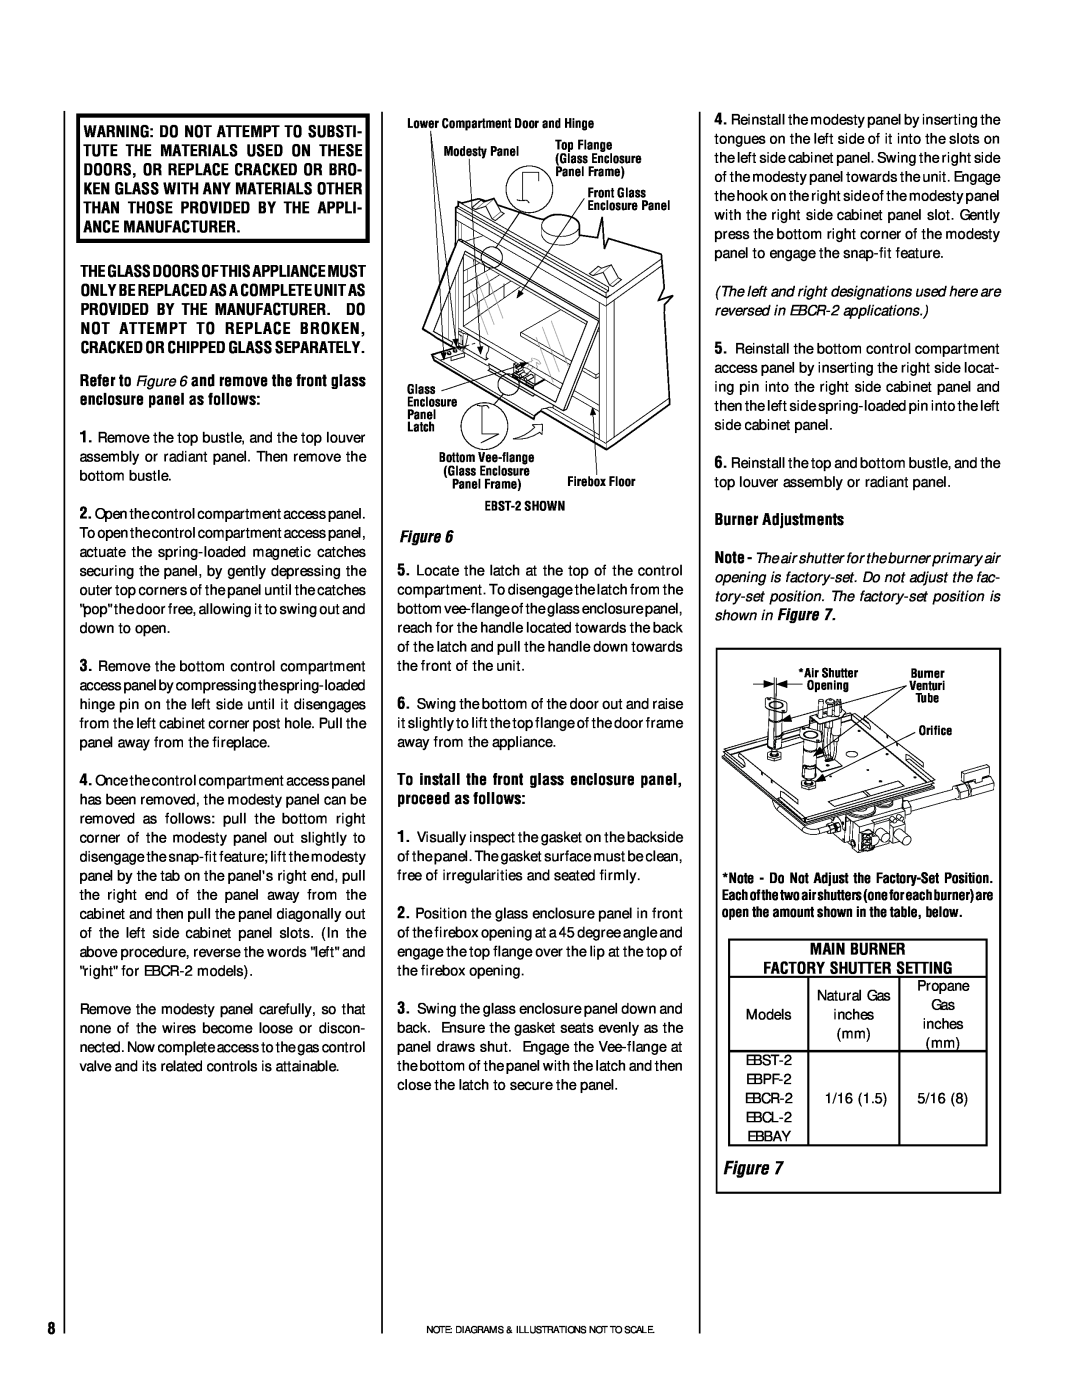 Lennox Hearth EBSTPM-2, EBSTNM-2 manual Figure, Burner Adjustments, Main Burner Factory Shutter Setting 